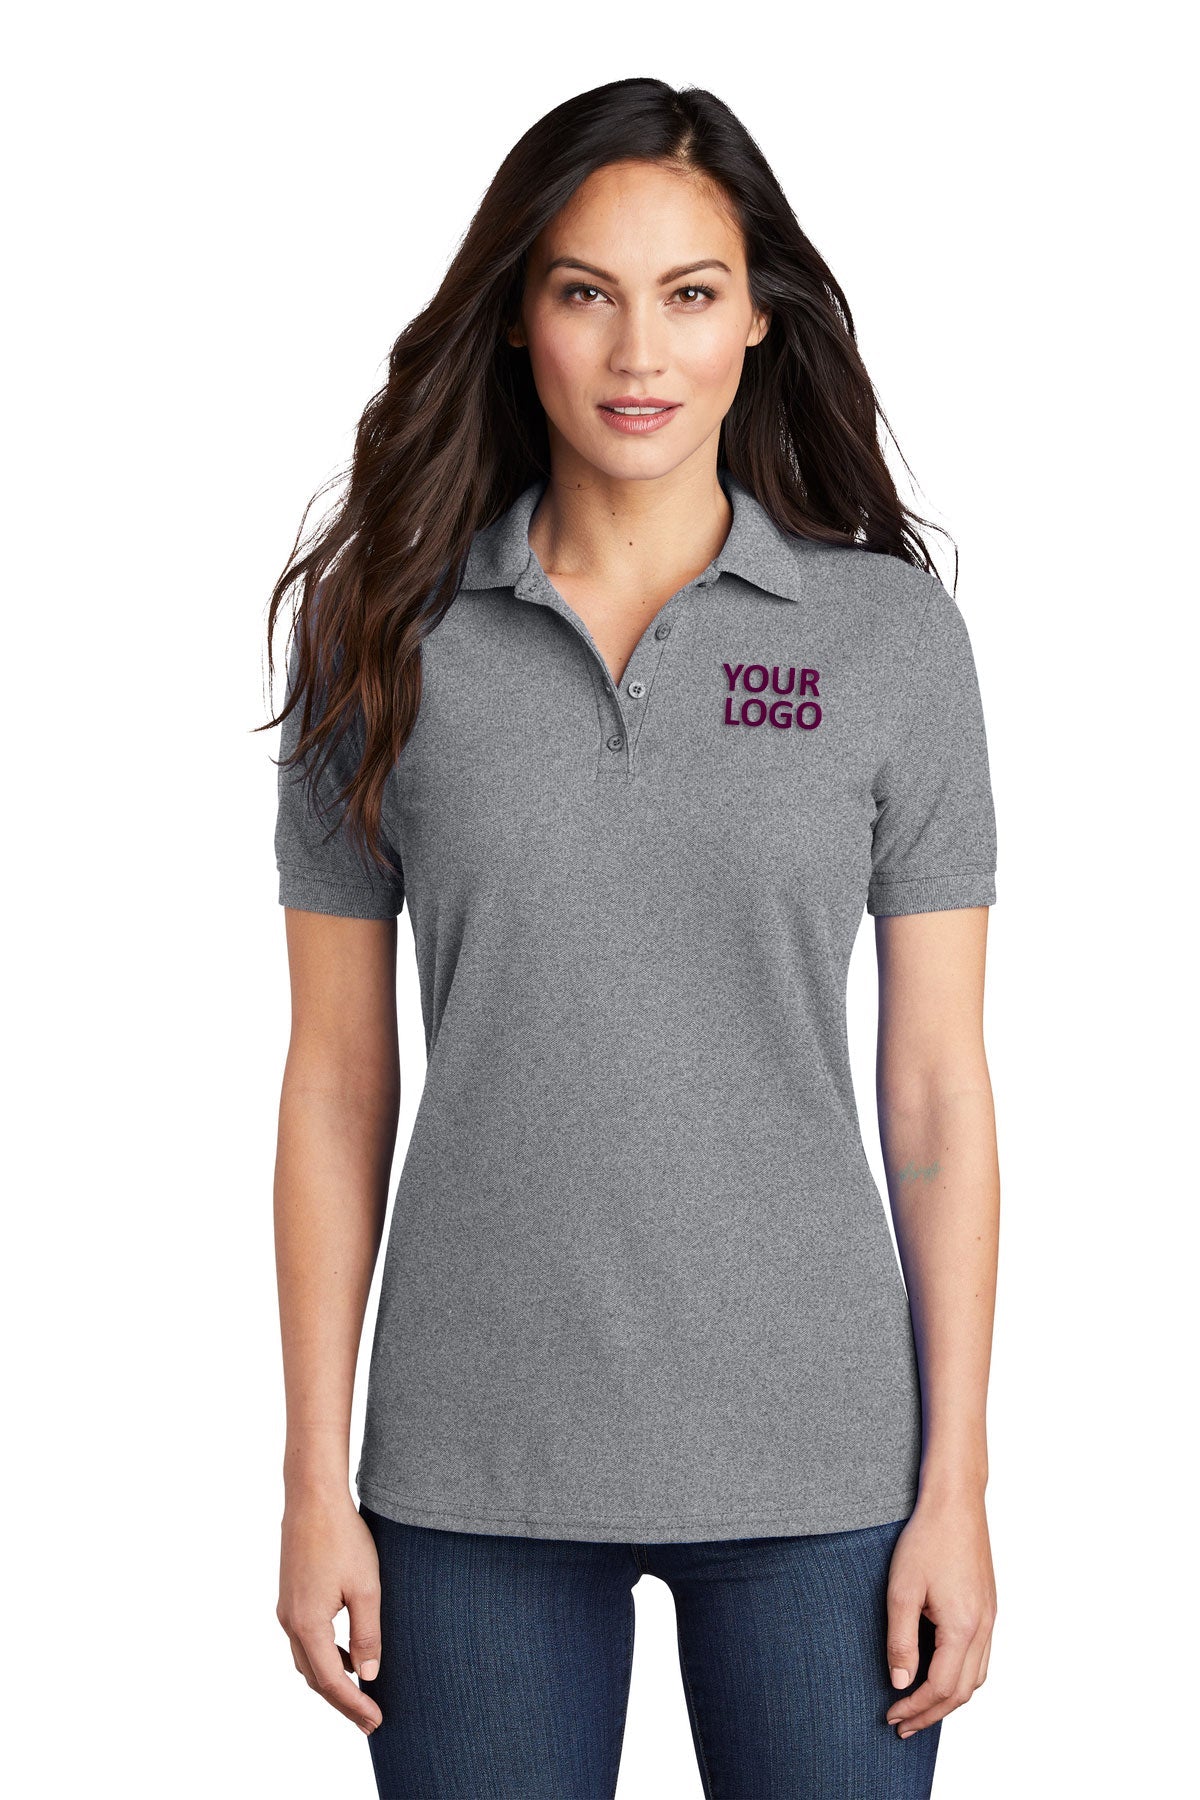 port & company athletic heather lkp155 custom polo shirts with logo